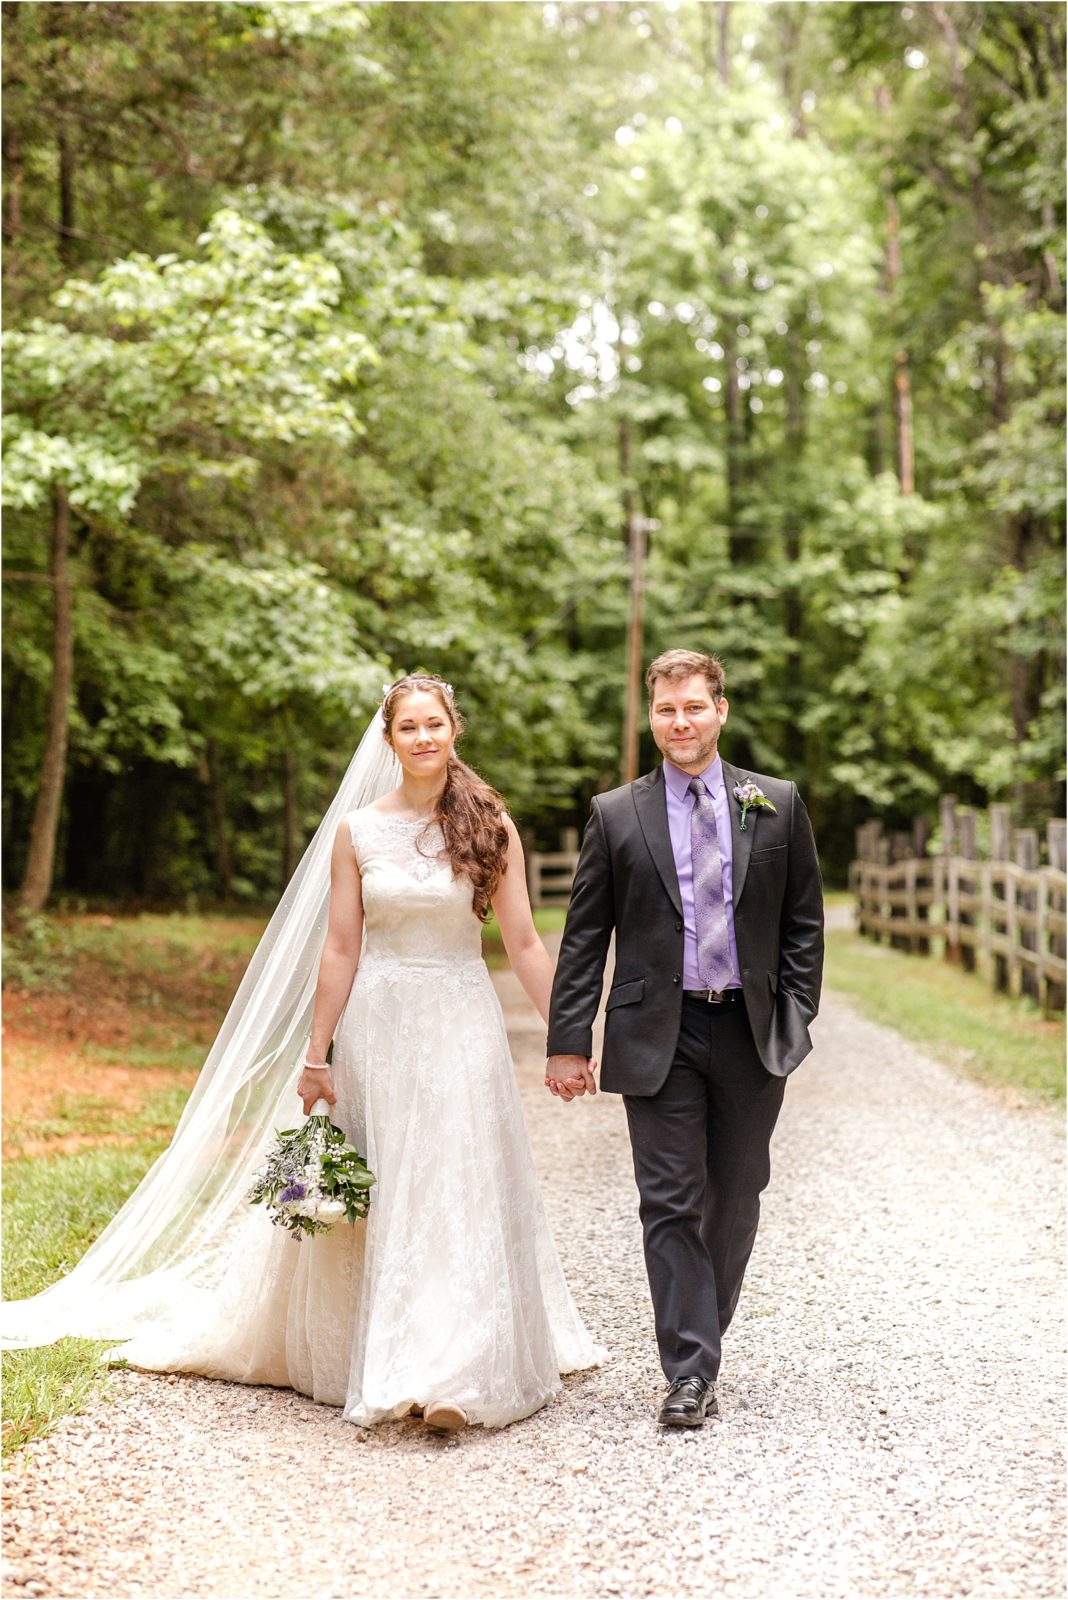 Wedding couple walking down gravel path